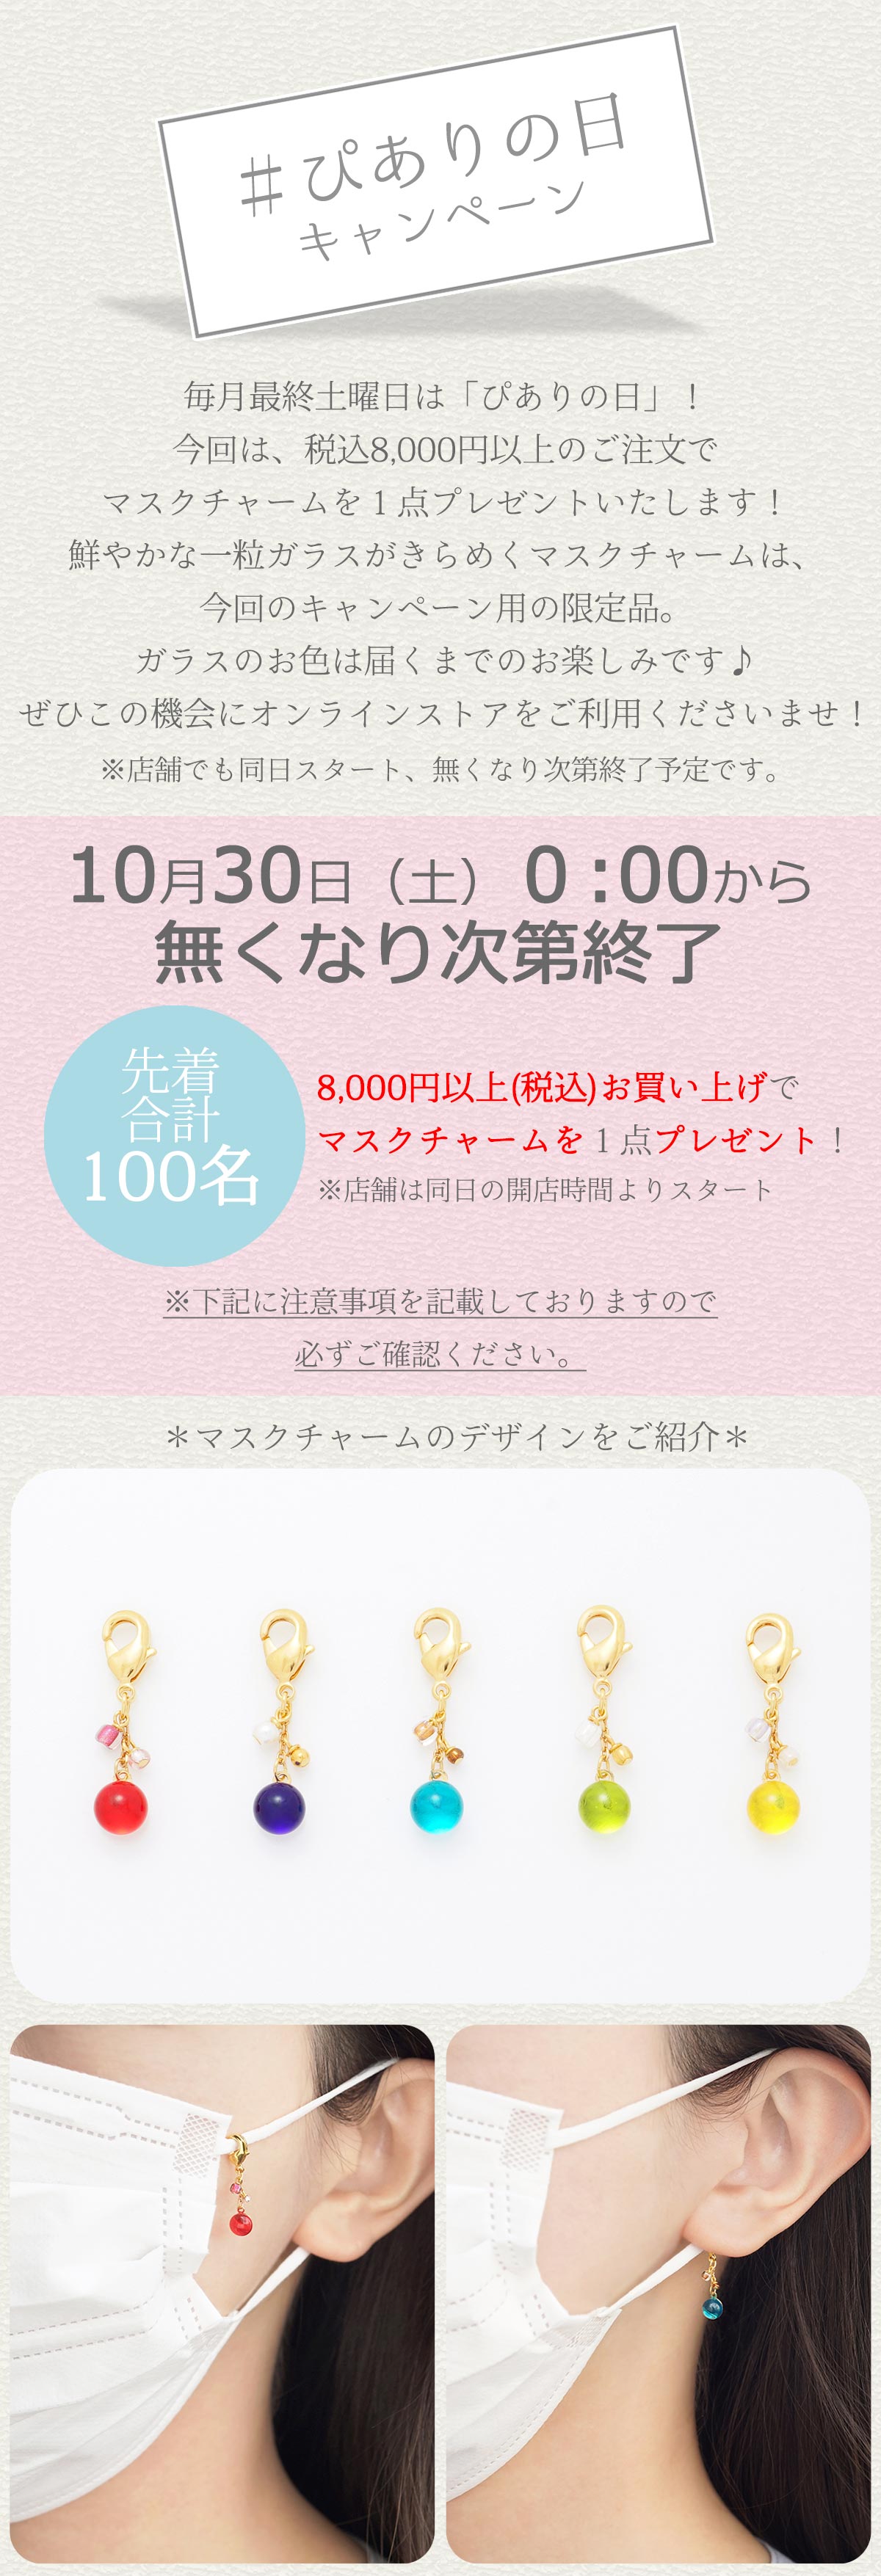 JewelryKyoto onlinestore / ガラス煌めくマスクチャームプレゼント